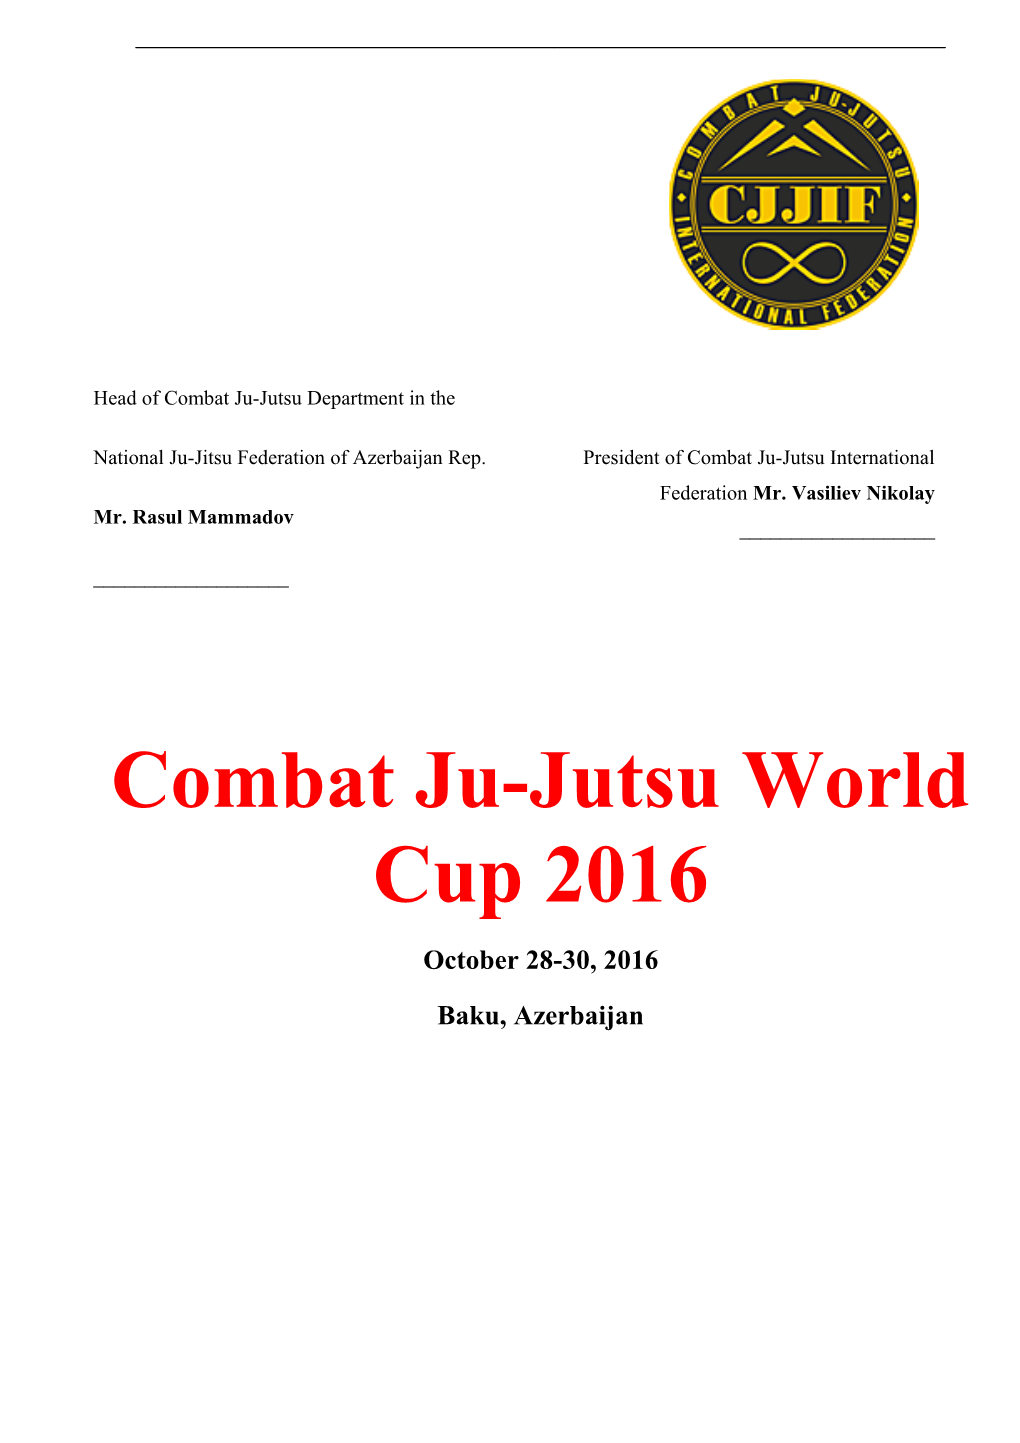 Head of Combat Ju-Jutsu Department in The